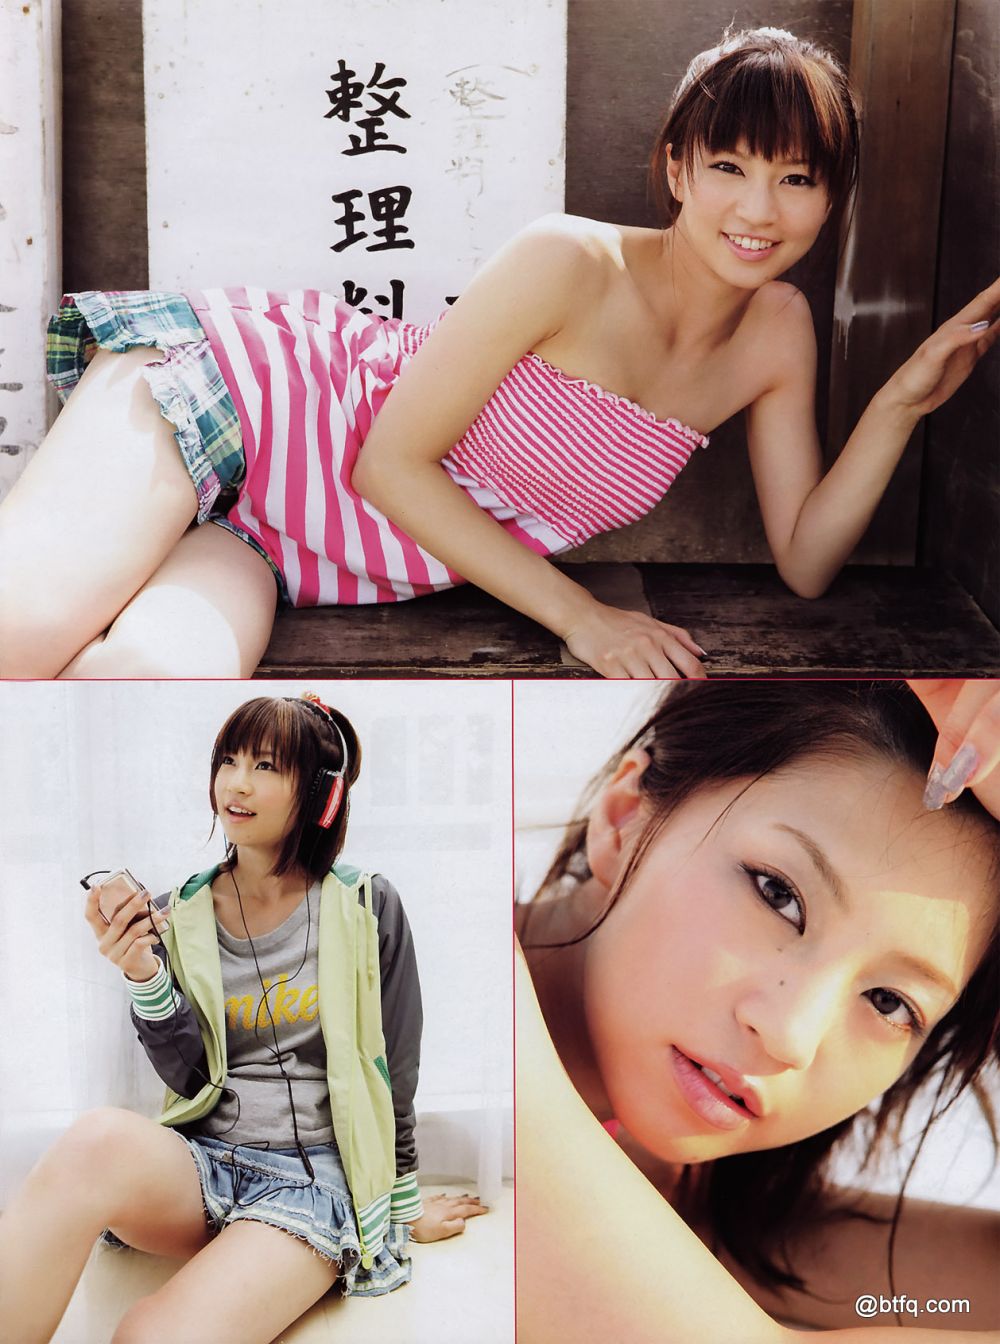 Misako Yasuda Sexy and Hottest Photos , Latest Pics